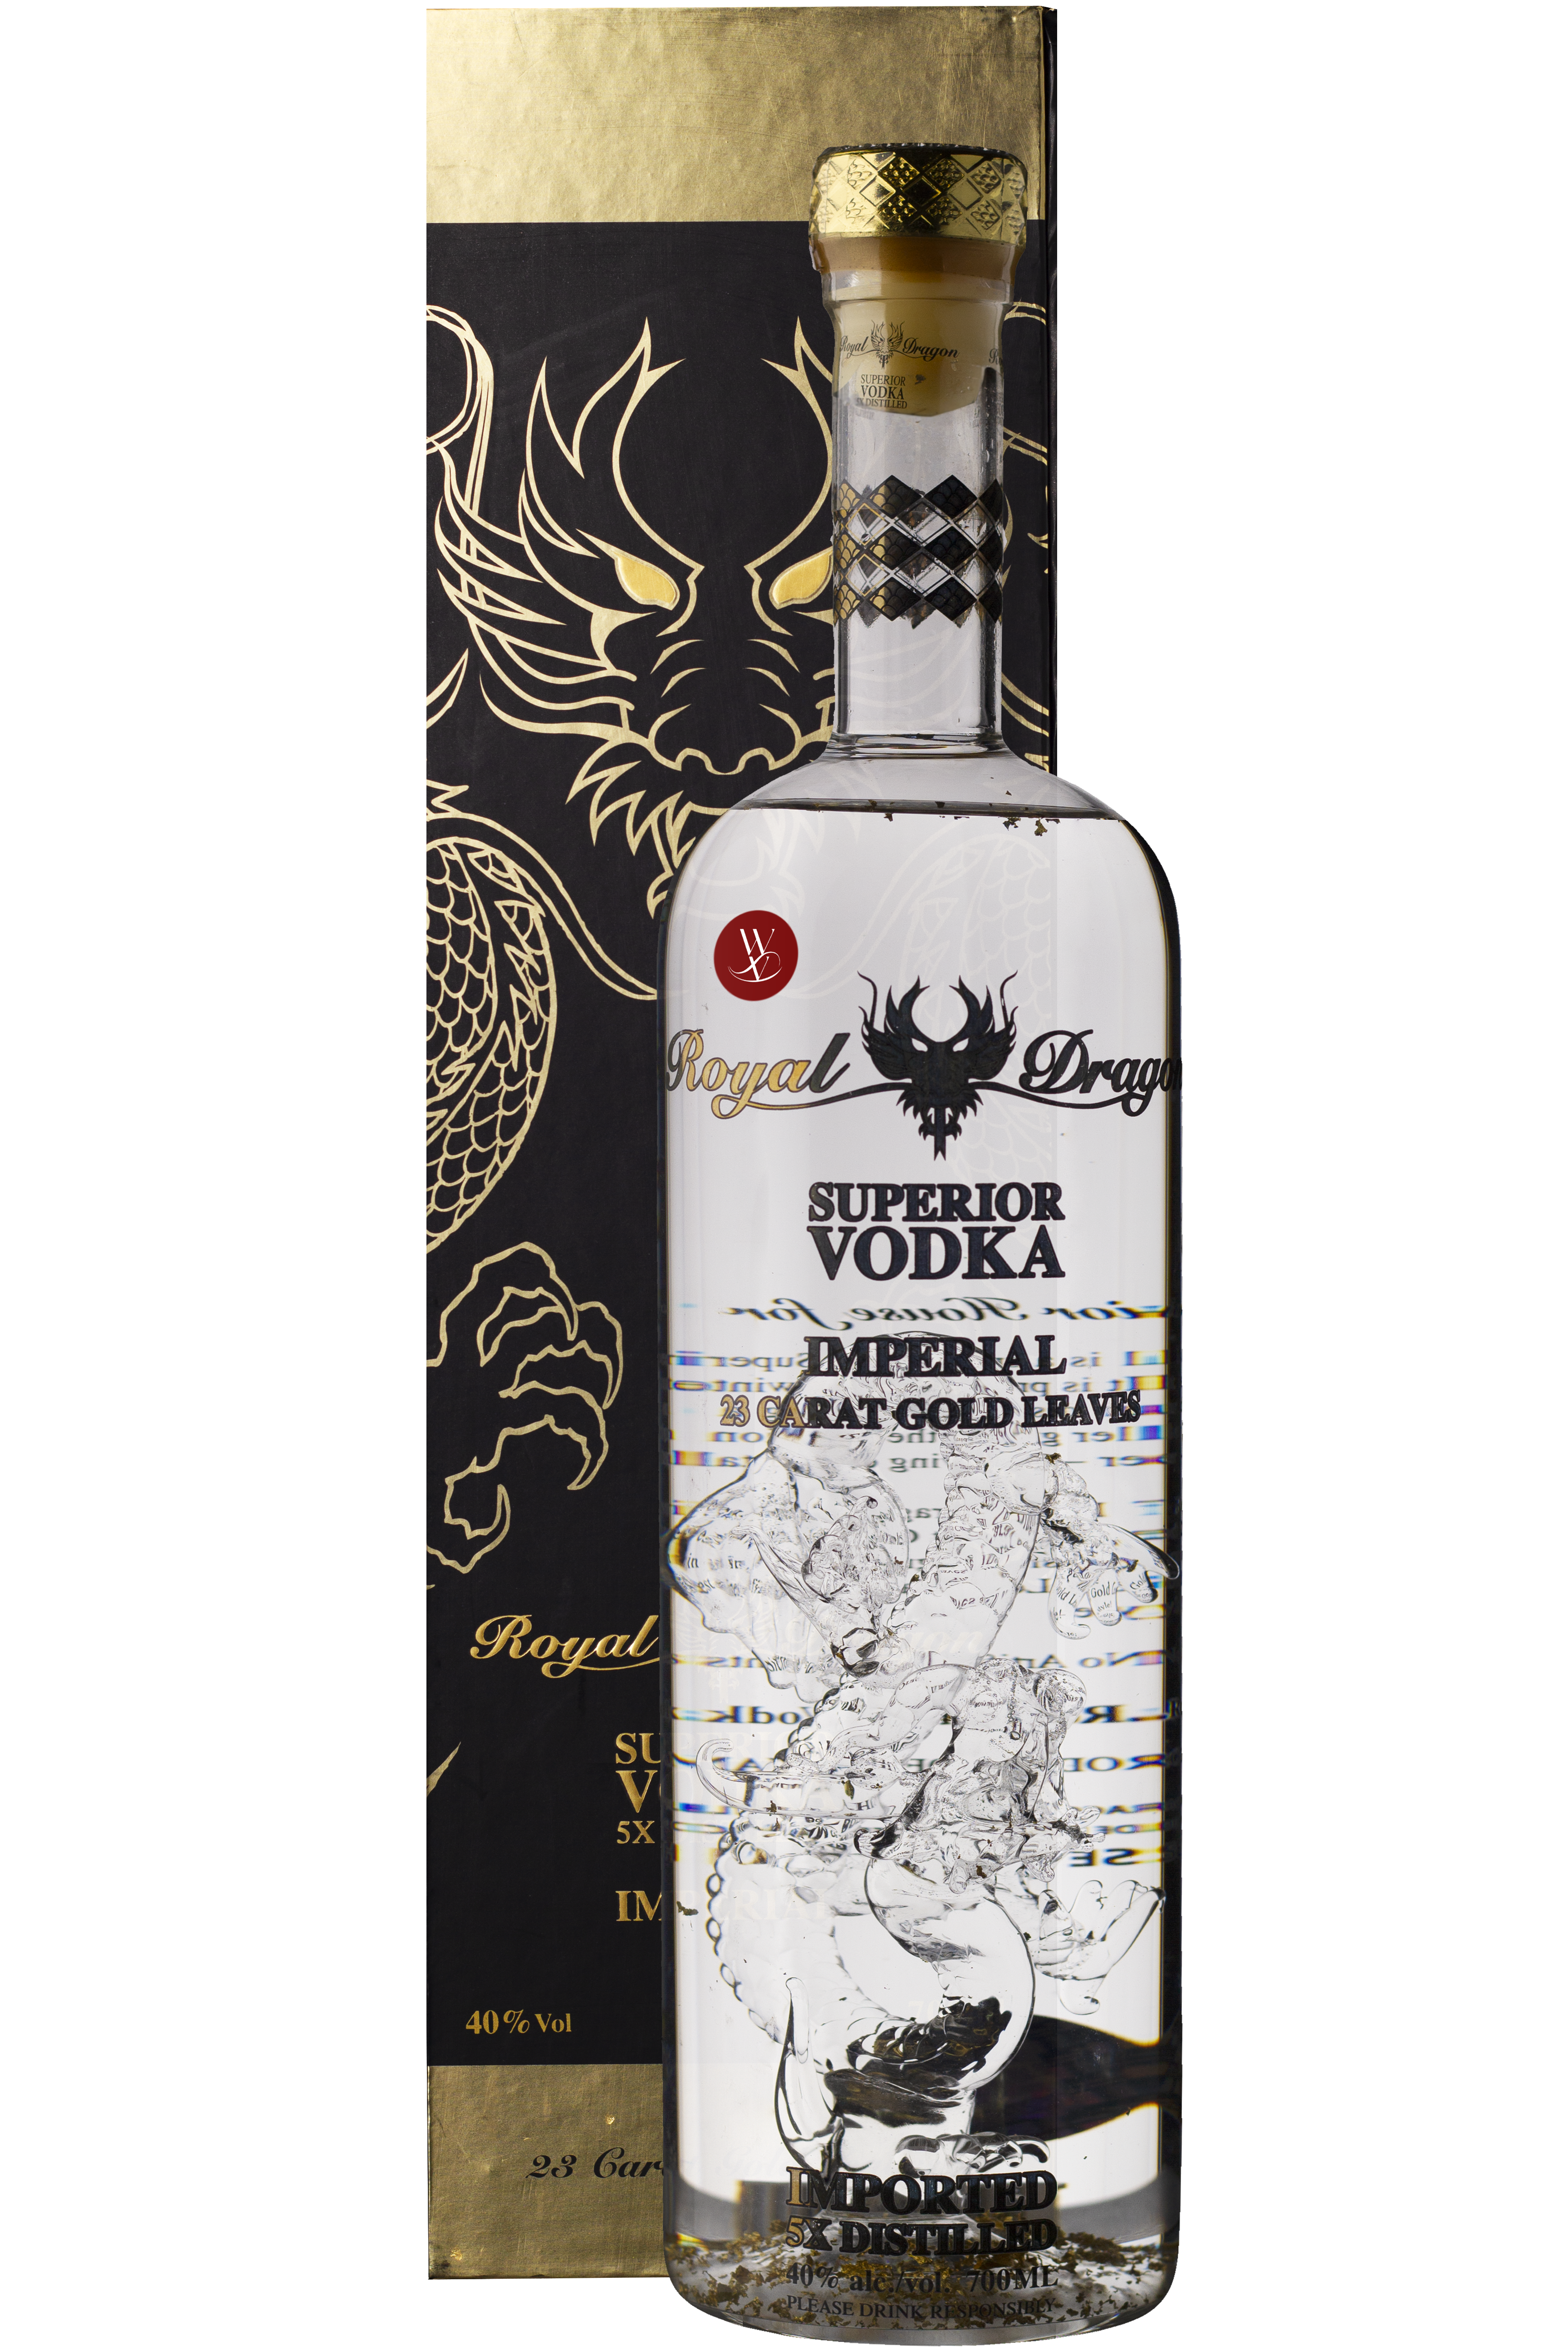 WineVins Vodka Royal Dragon Imperial